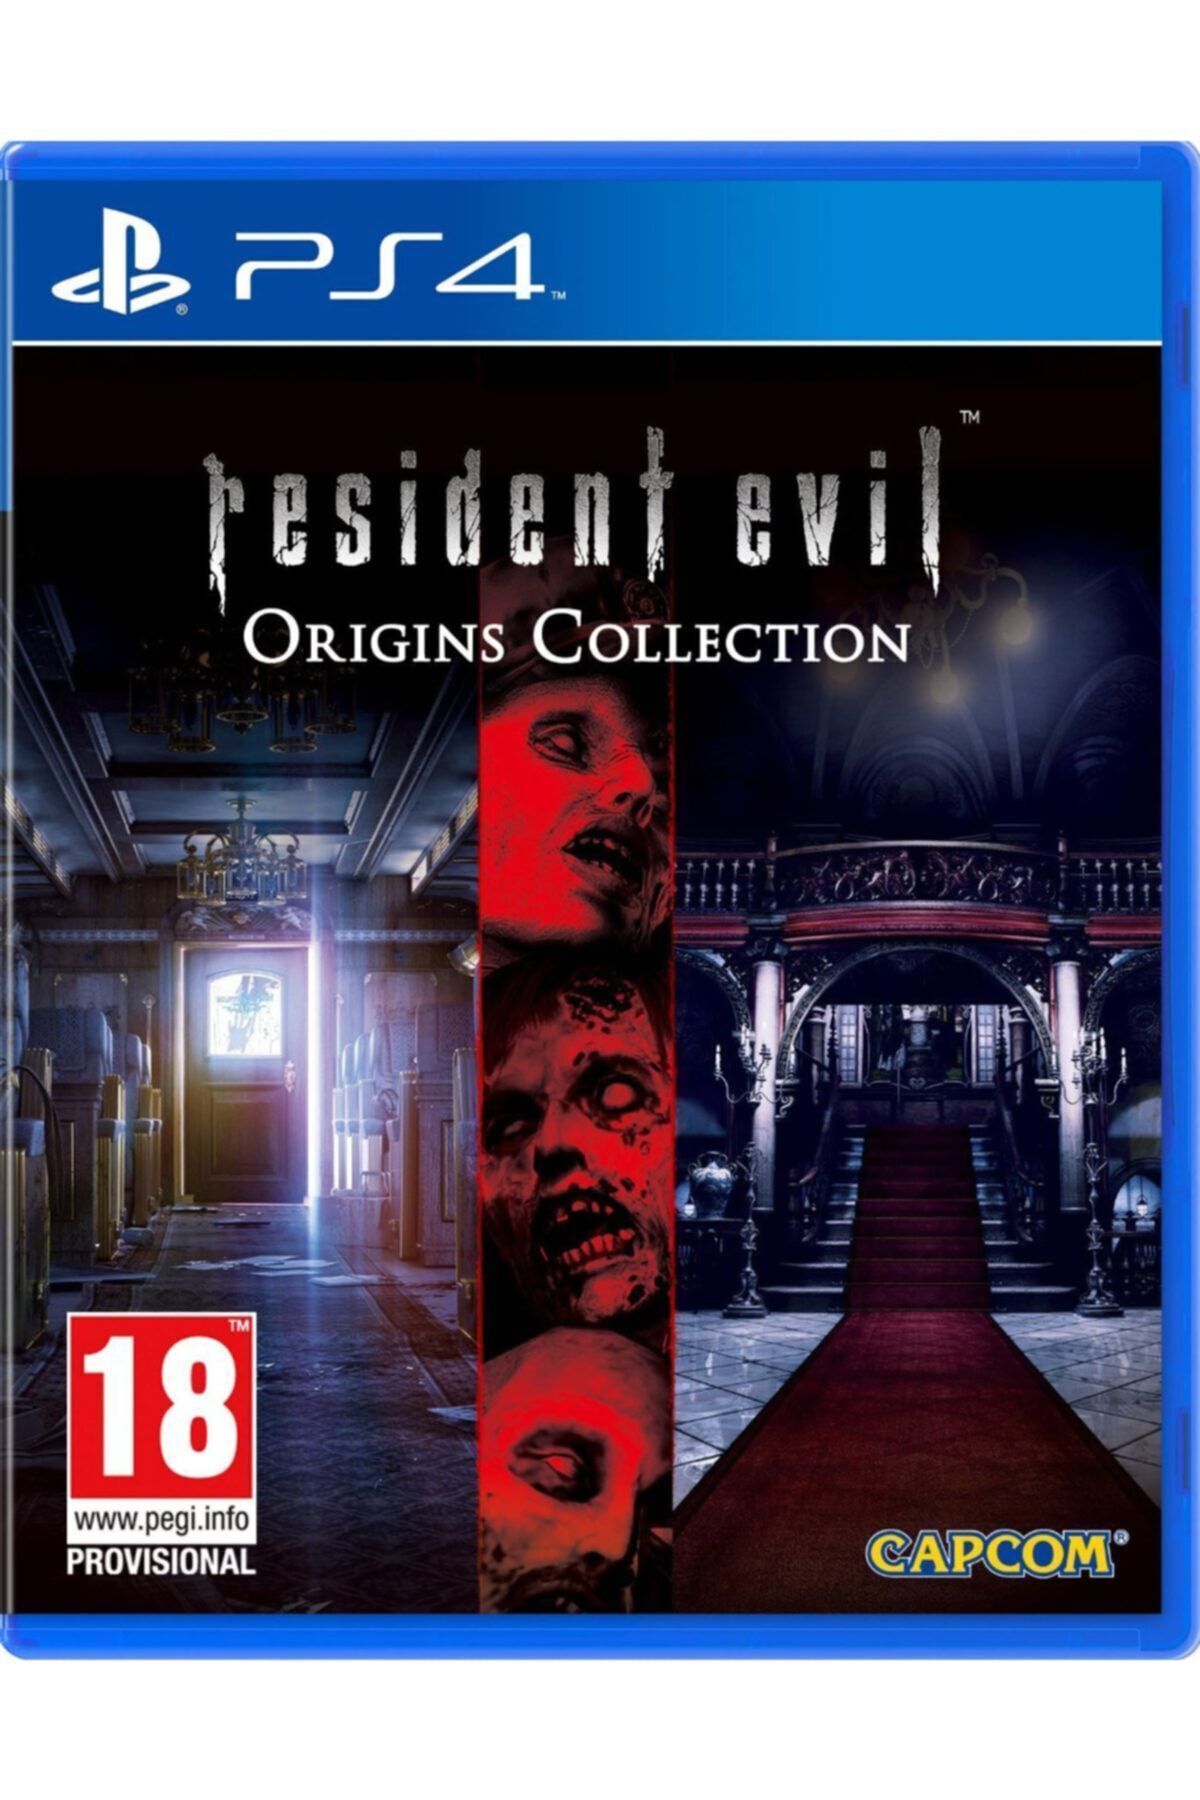 CAPCOM Ps4 Resident Evil Origins Collection